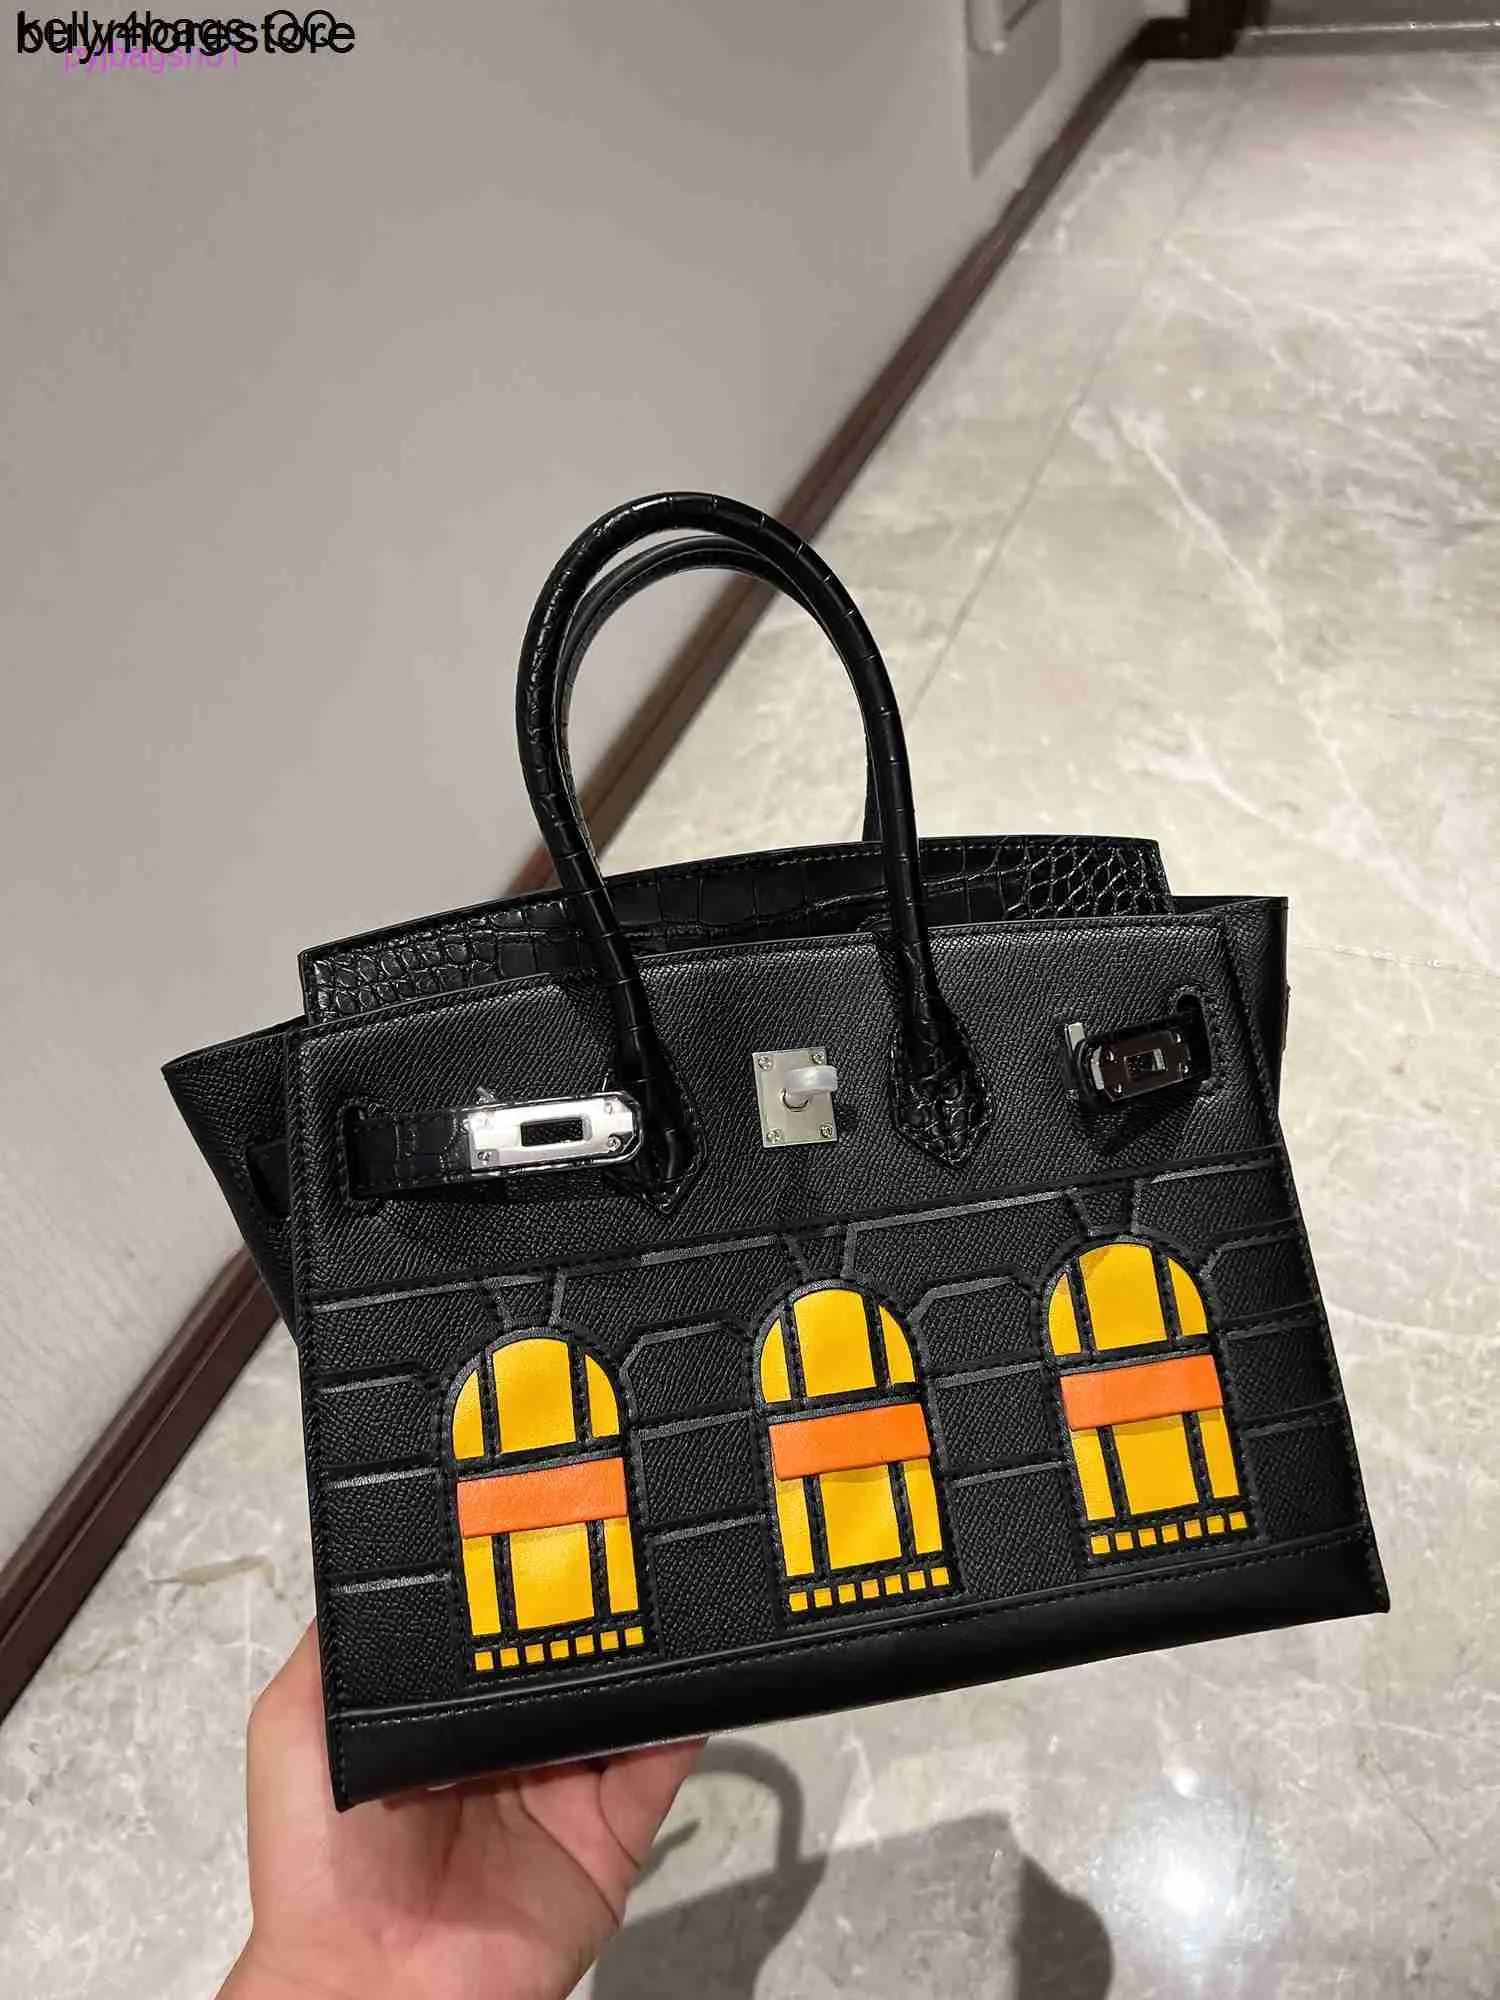 Handtasche 7a Handgemacht Small House Krokodilleder Marke Nähen Modedruck portabl0Z6Z